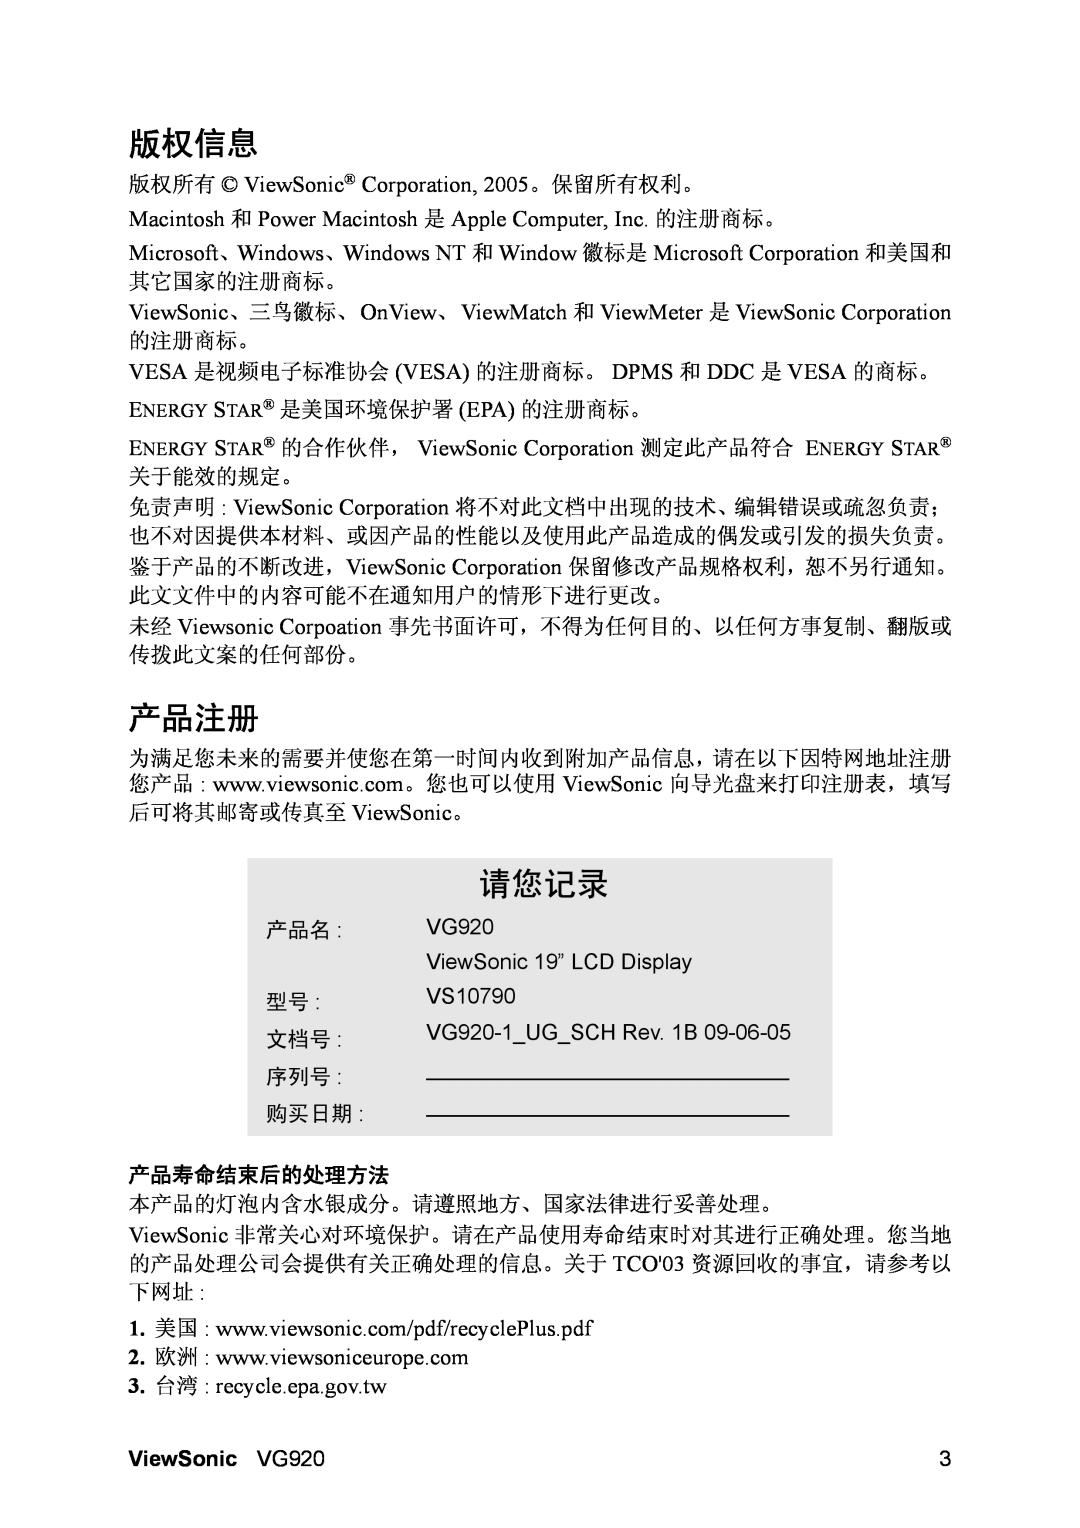 ViewSonic manual 版权信息, 产品注册, 请您记录, 3.台湾 : recycle.epa.gov.tw, 产品寿命结束后的处理方法, ViewSonic VG920 